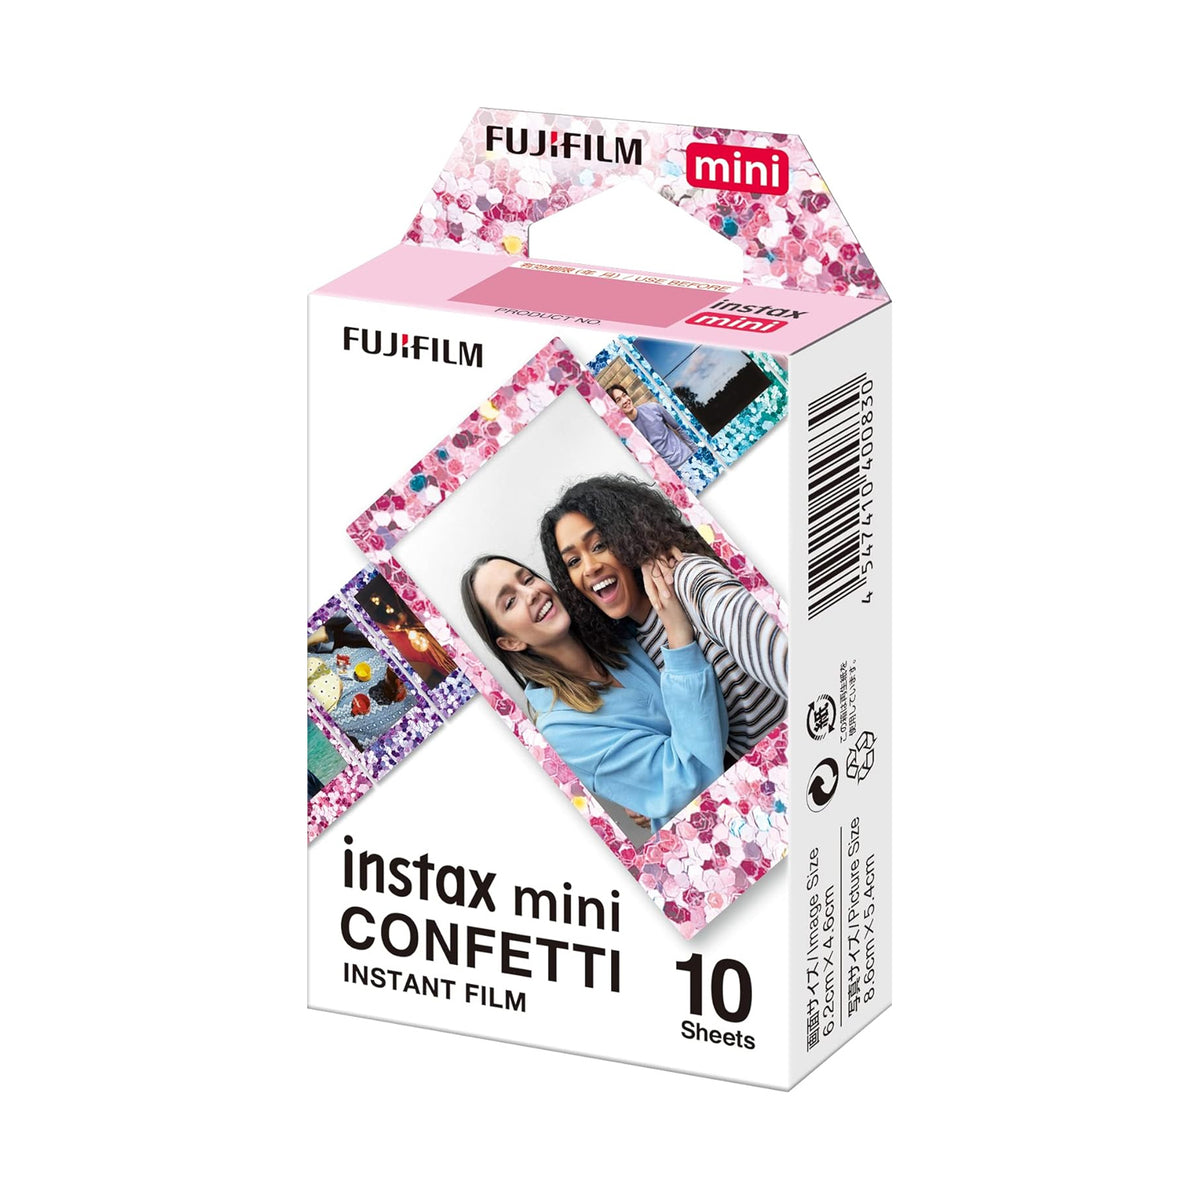 Fujifilm Instax Mini Confetti Film Pack